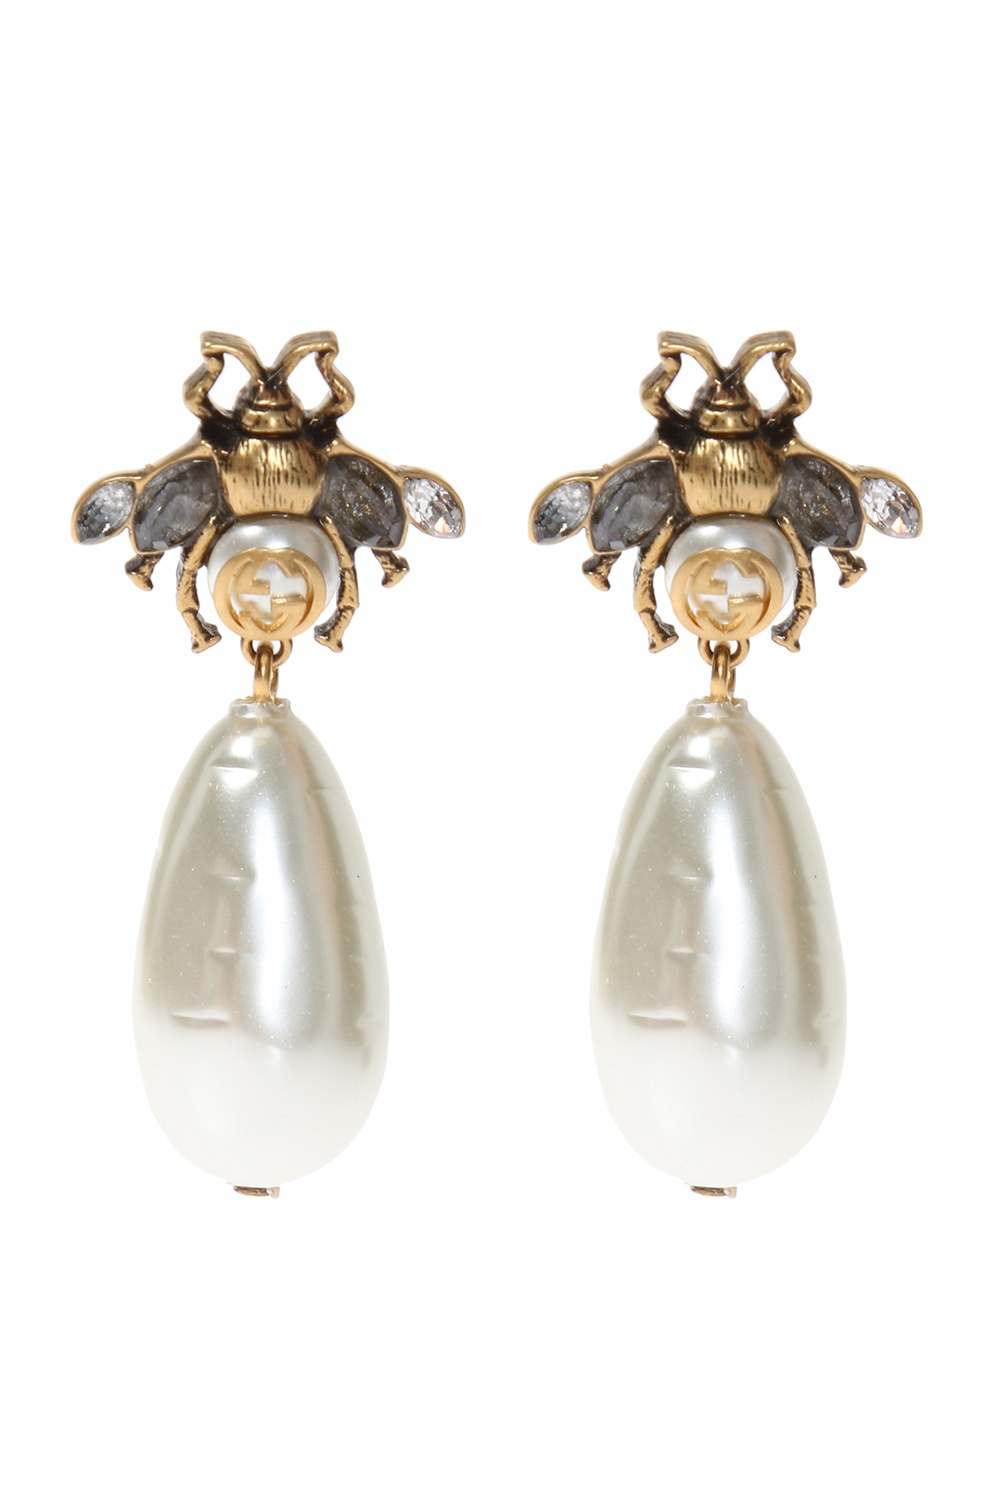 Gucci Embellished earrings